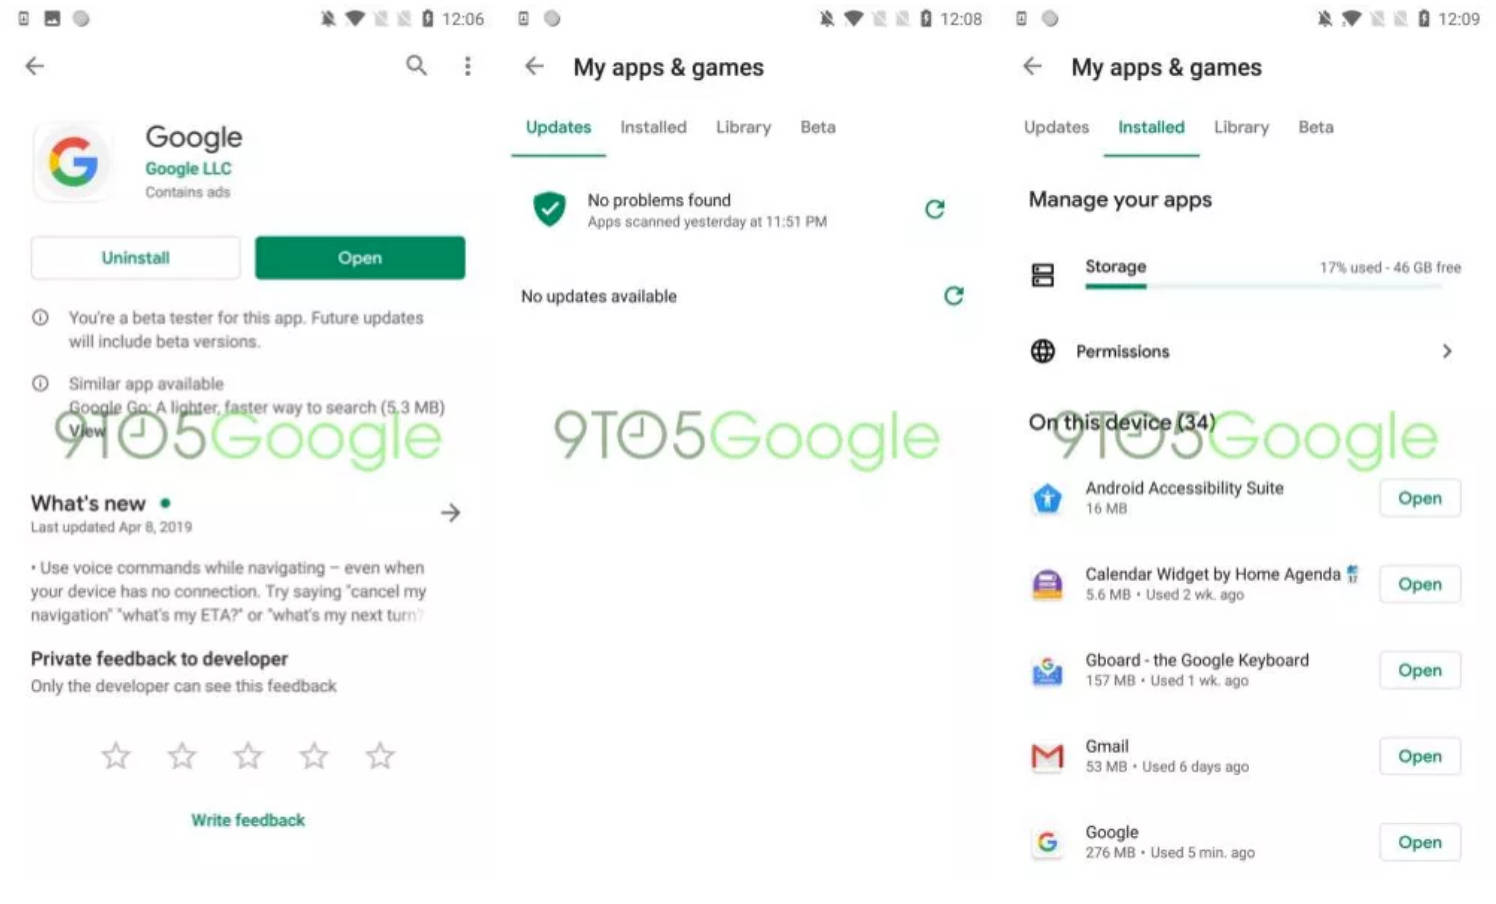 Sklep Play Google Android zmiany oparte na Material Theme nowy wygląd